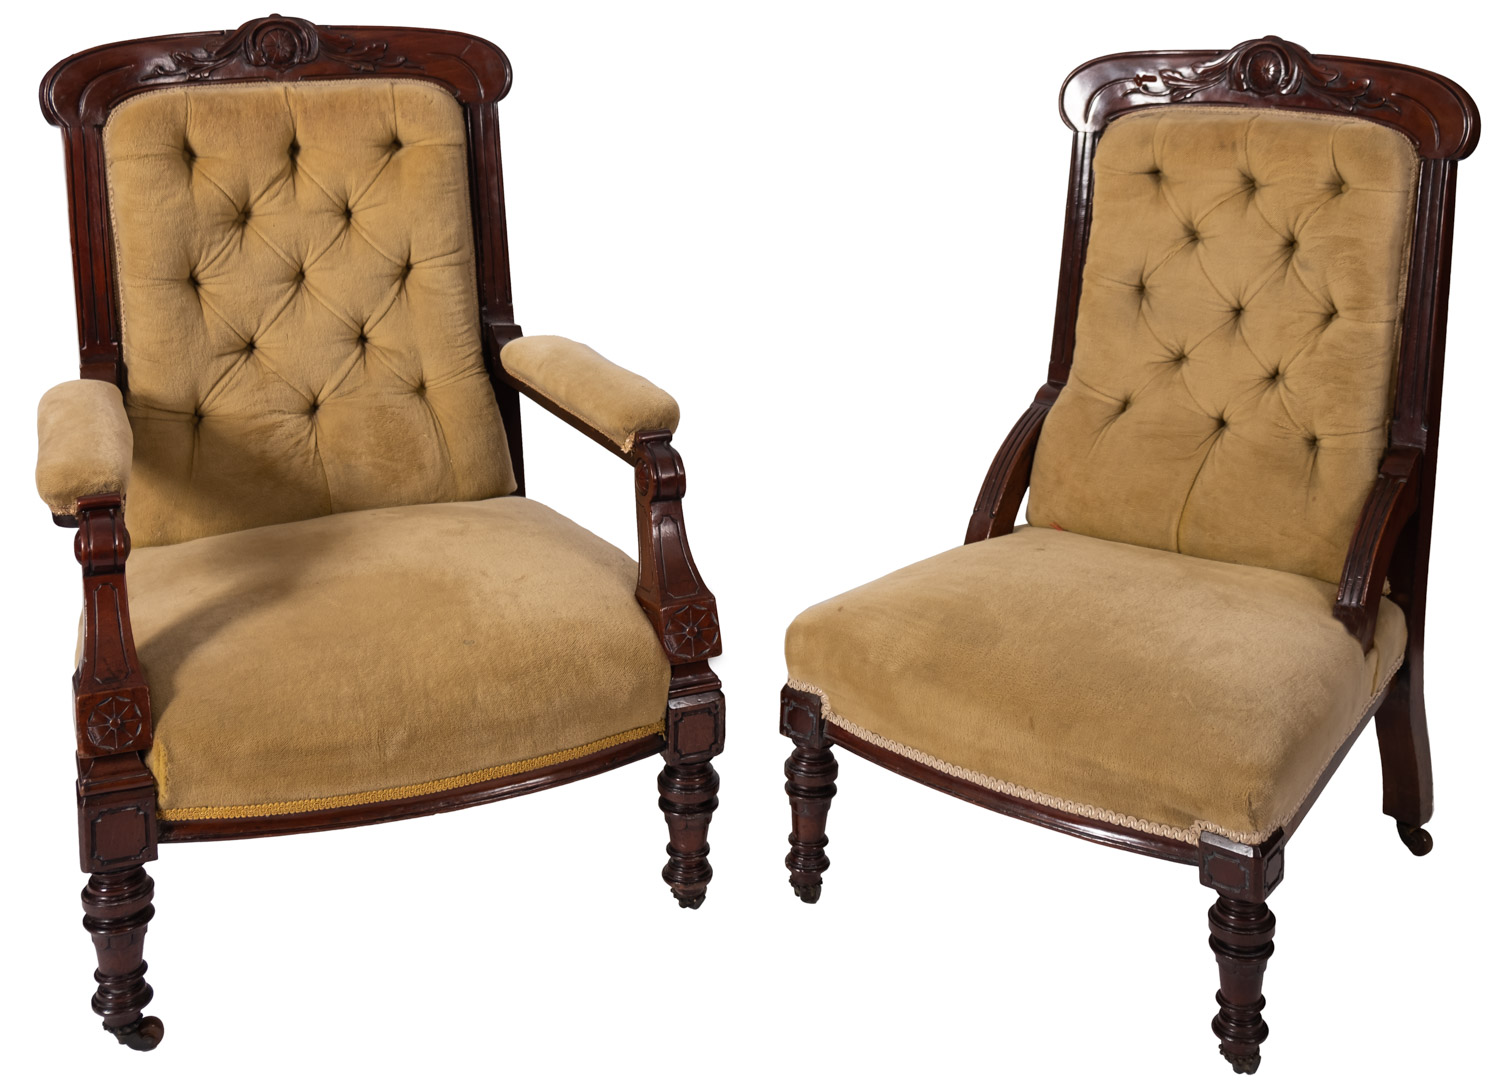 An gentleman's Edwardian walnut arm chair and matching lady's chair , circa 1900,